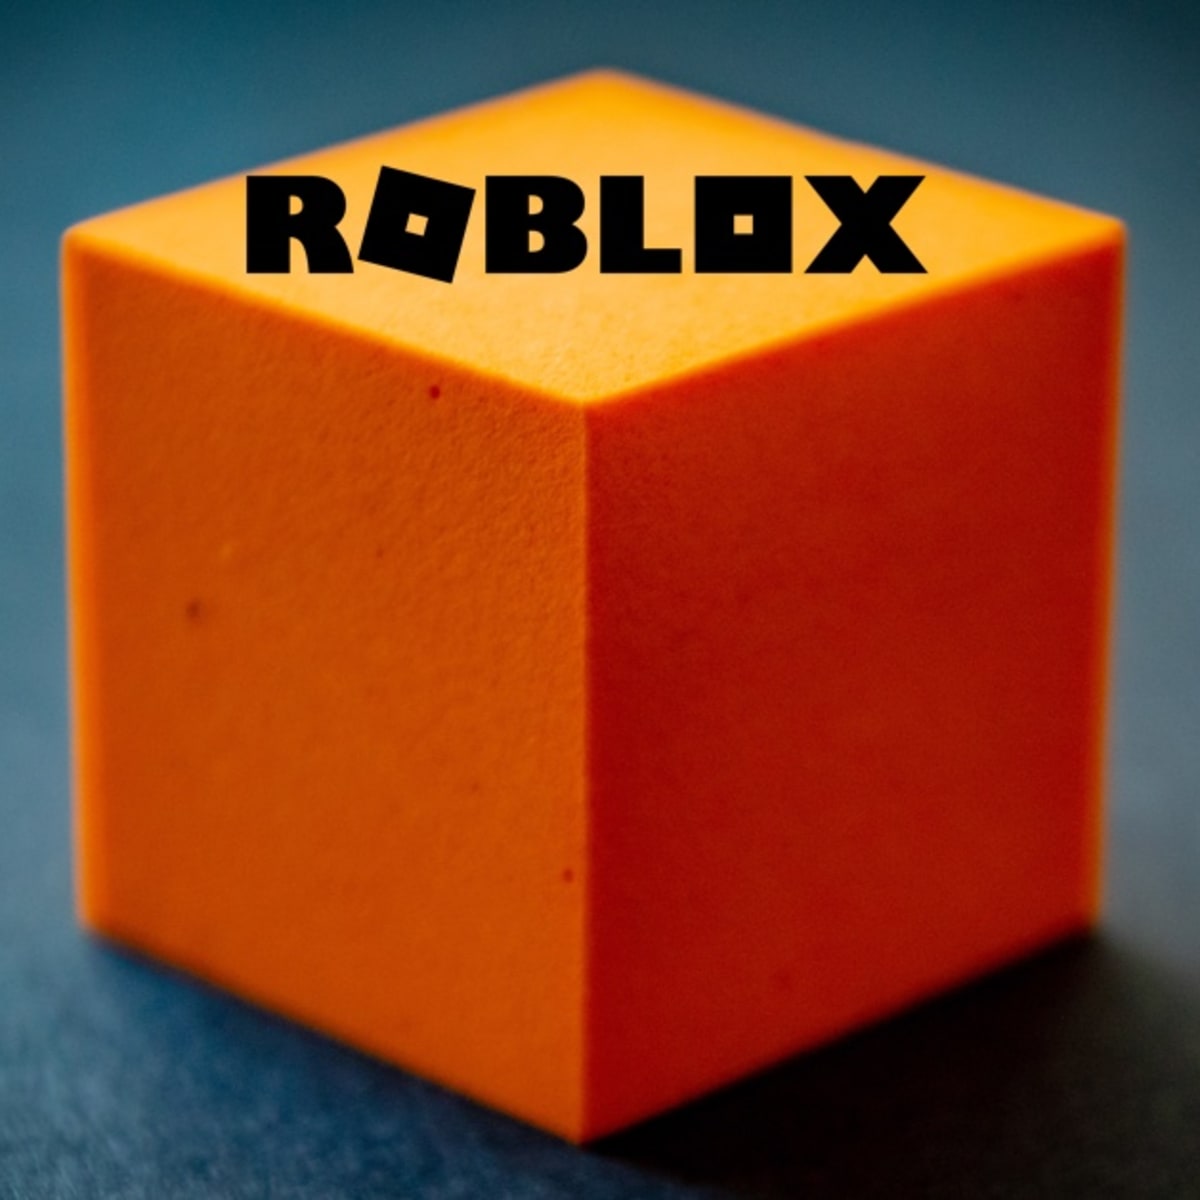 Rblx stock